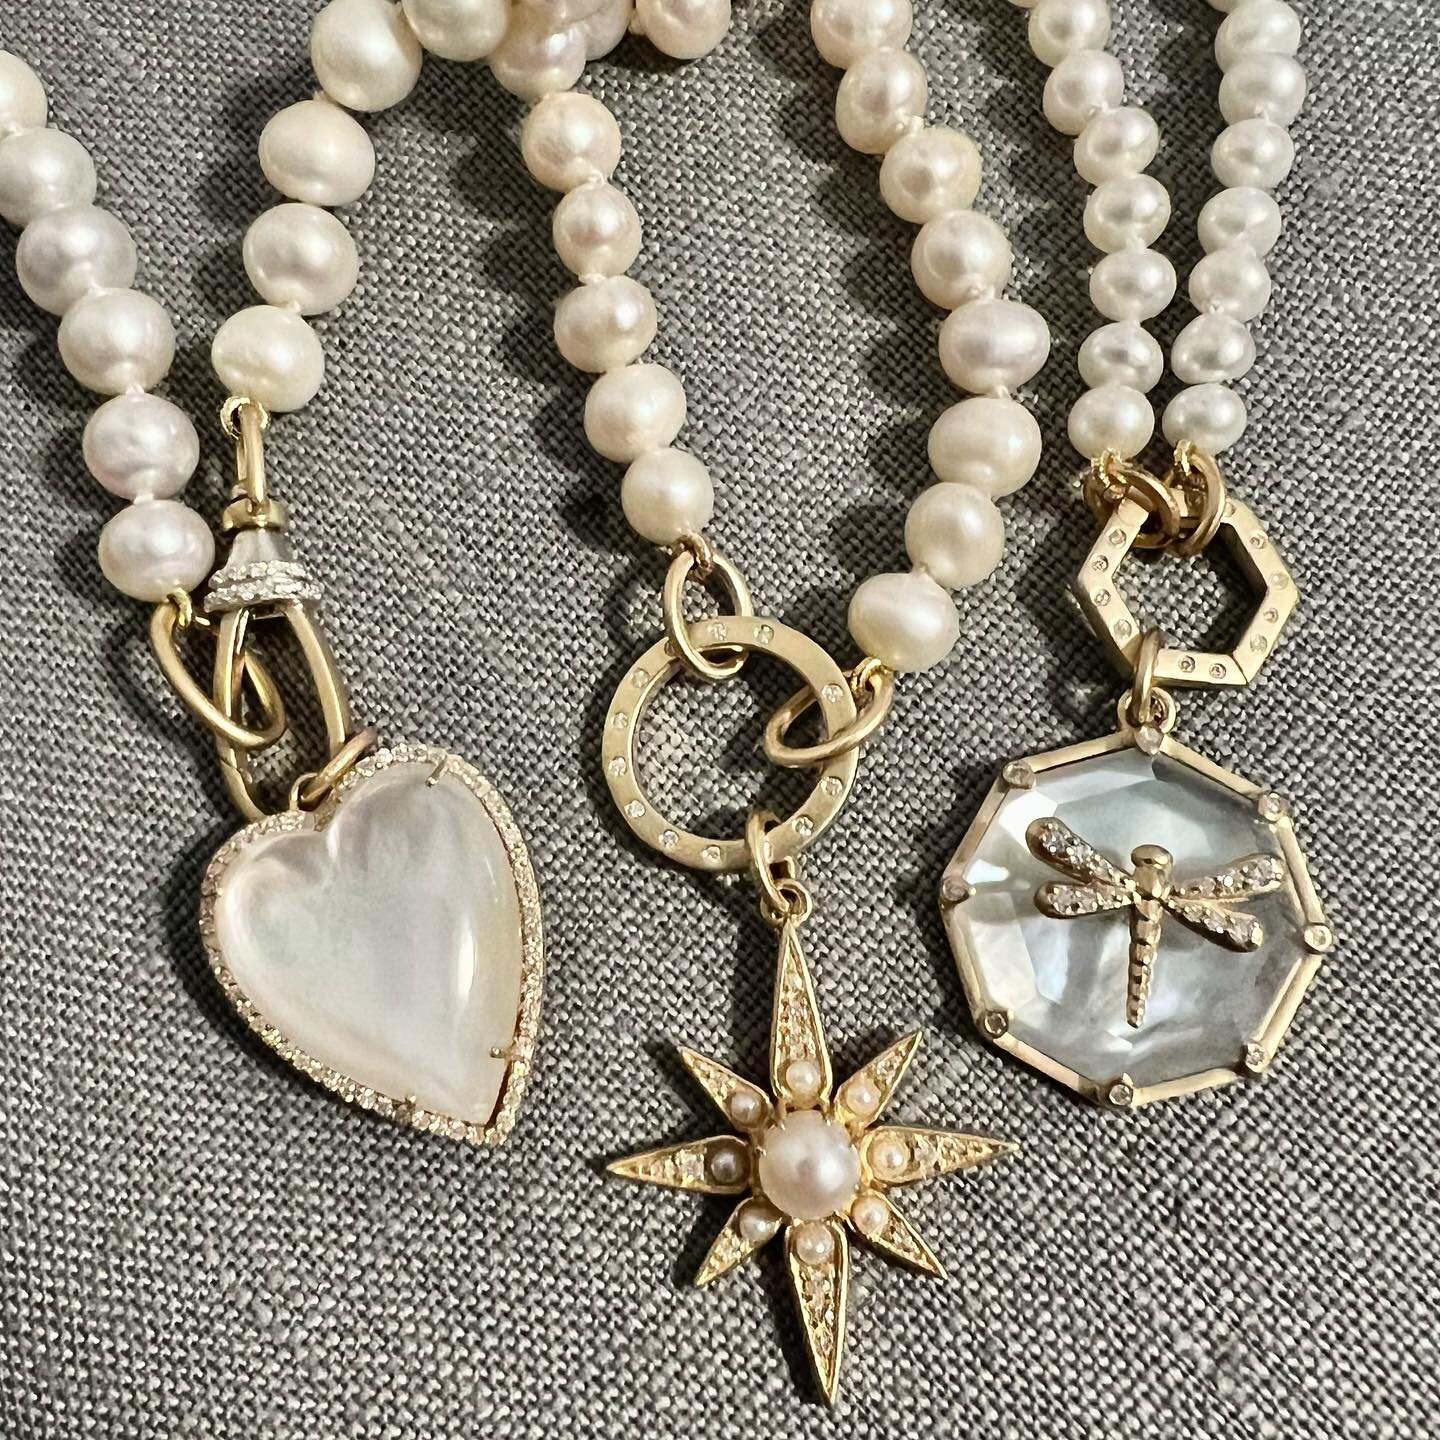 These beauties are headed to @pinklagoon!
.
.
.
.
#pearls #gold #diamonds #meaningfuljewelry #giftideas #tistheseason #wishlist #giftsforher #sparkle